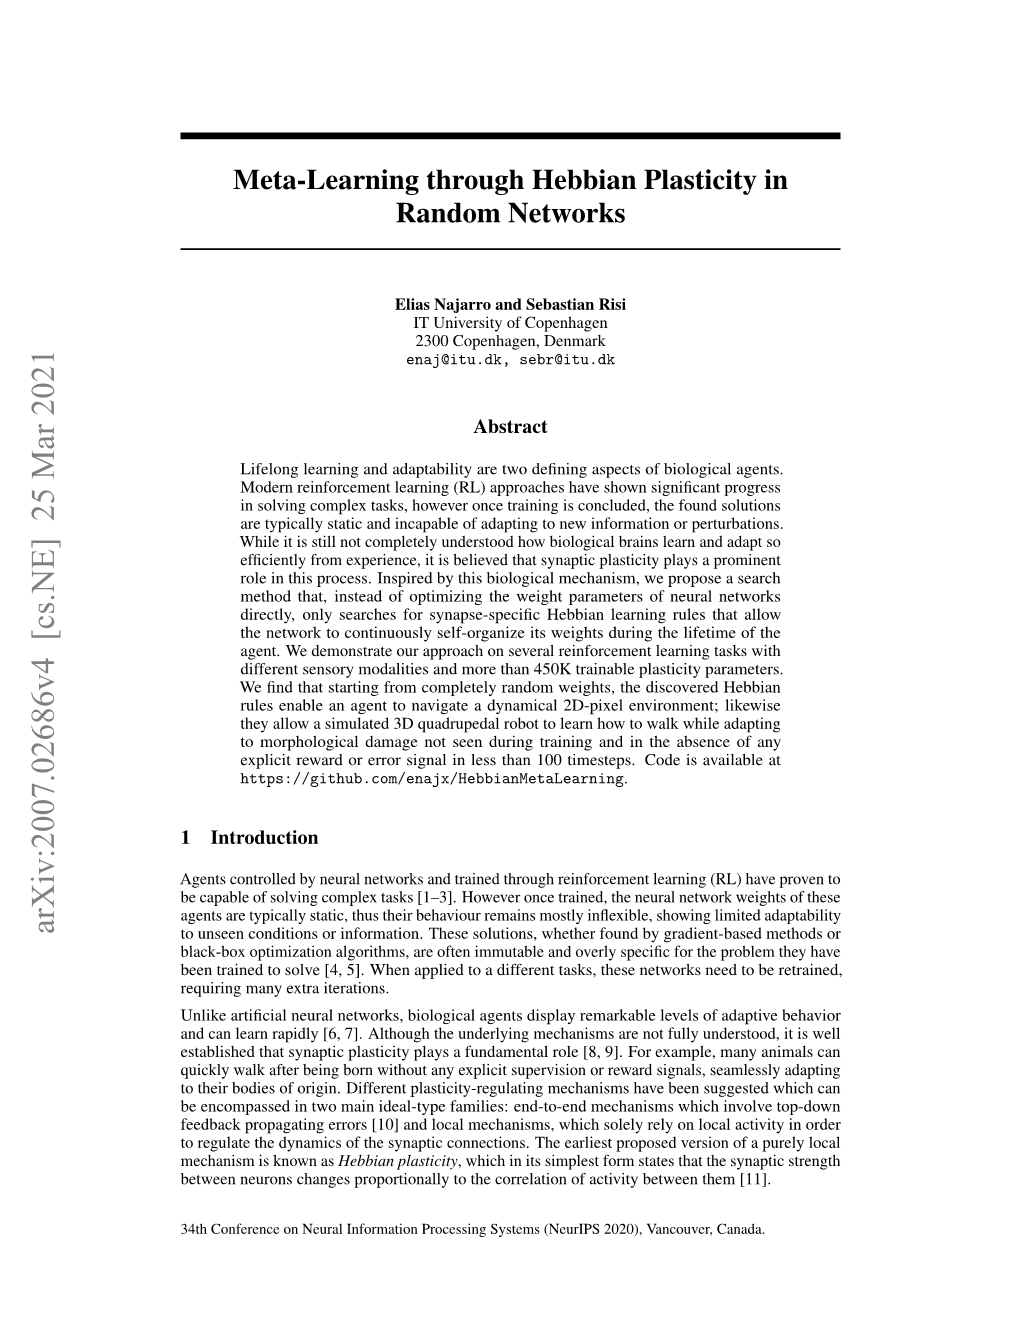 Meta-Learning Through Hebbian Plasticity in Random Networks